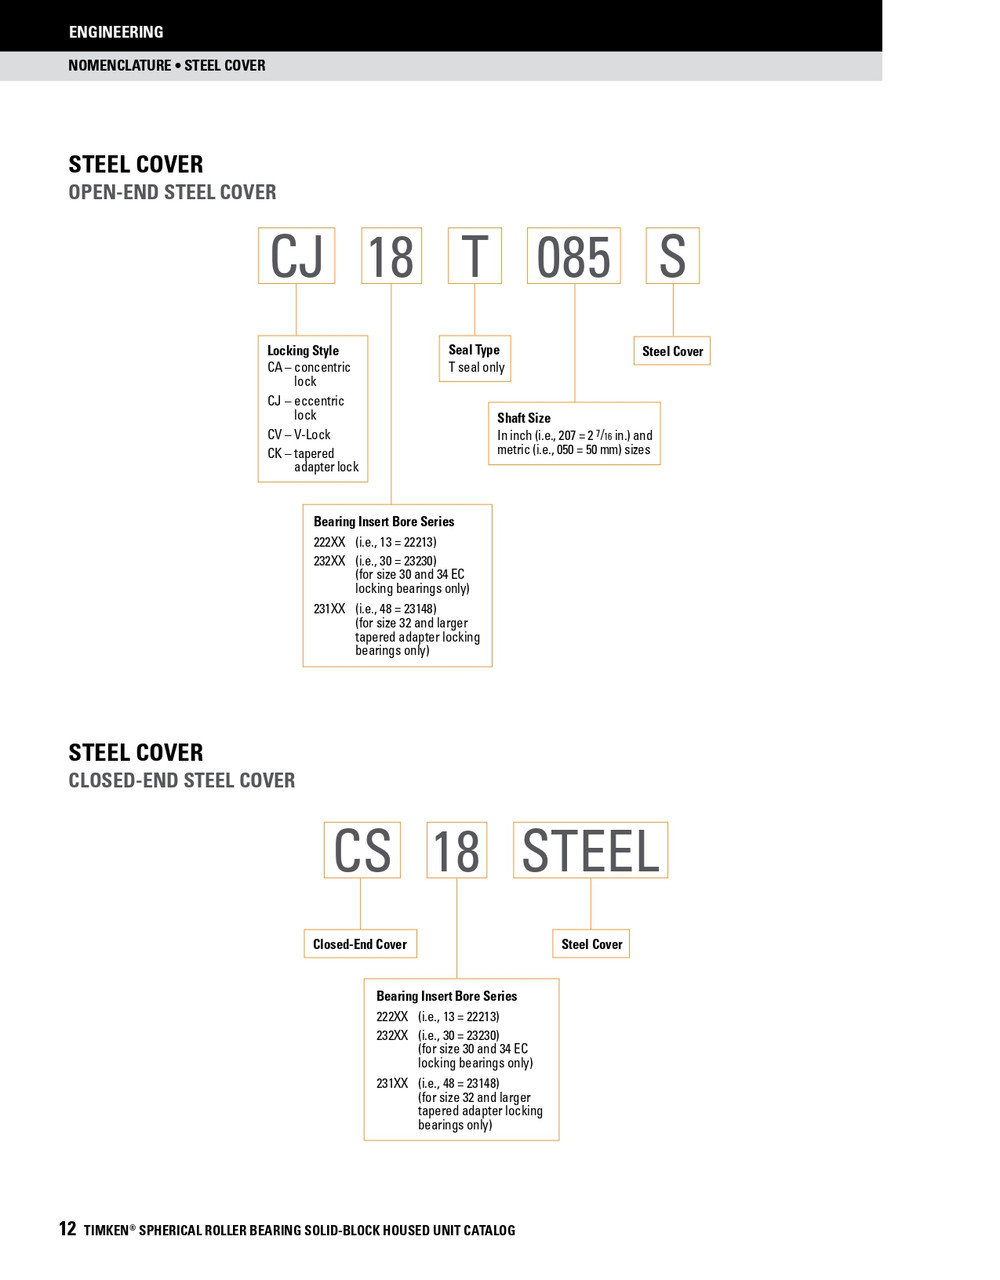 1-7/16" Timken SRB Steel Open End Cover w/Teflon Seal - QA Concentric Lock Type  CA08T107S